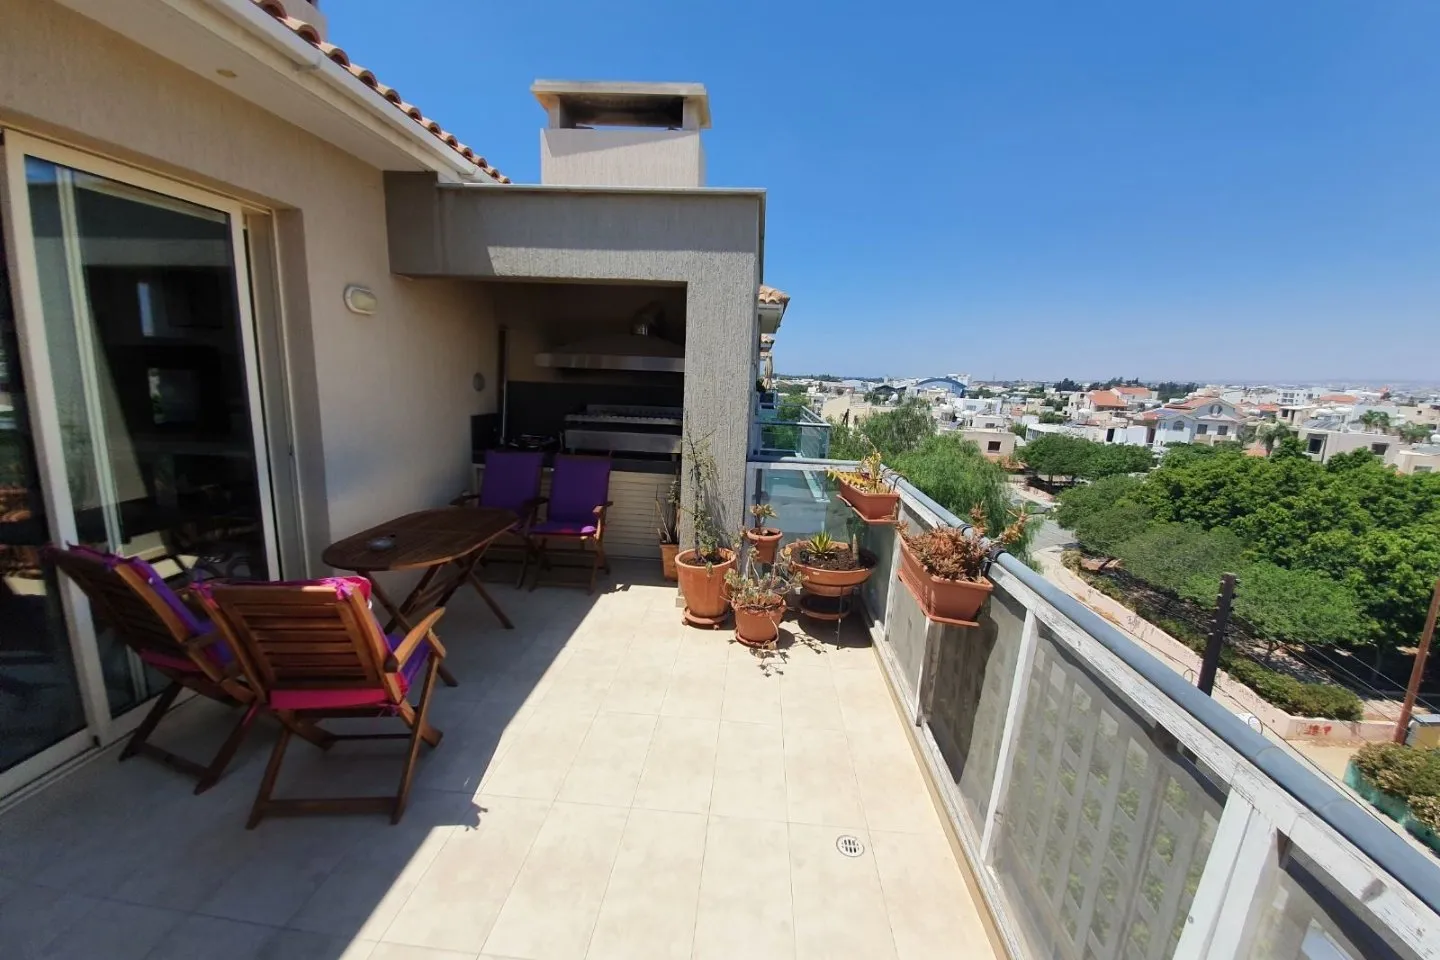 2 Bedroom Apartment for Rent in Limassol – Ekali